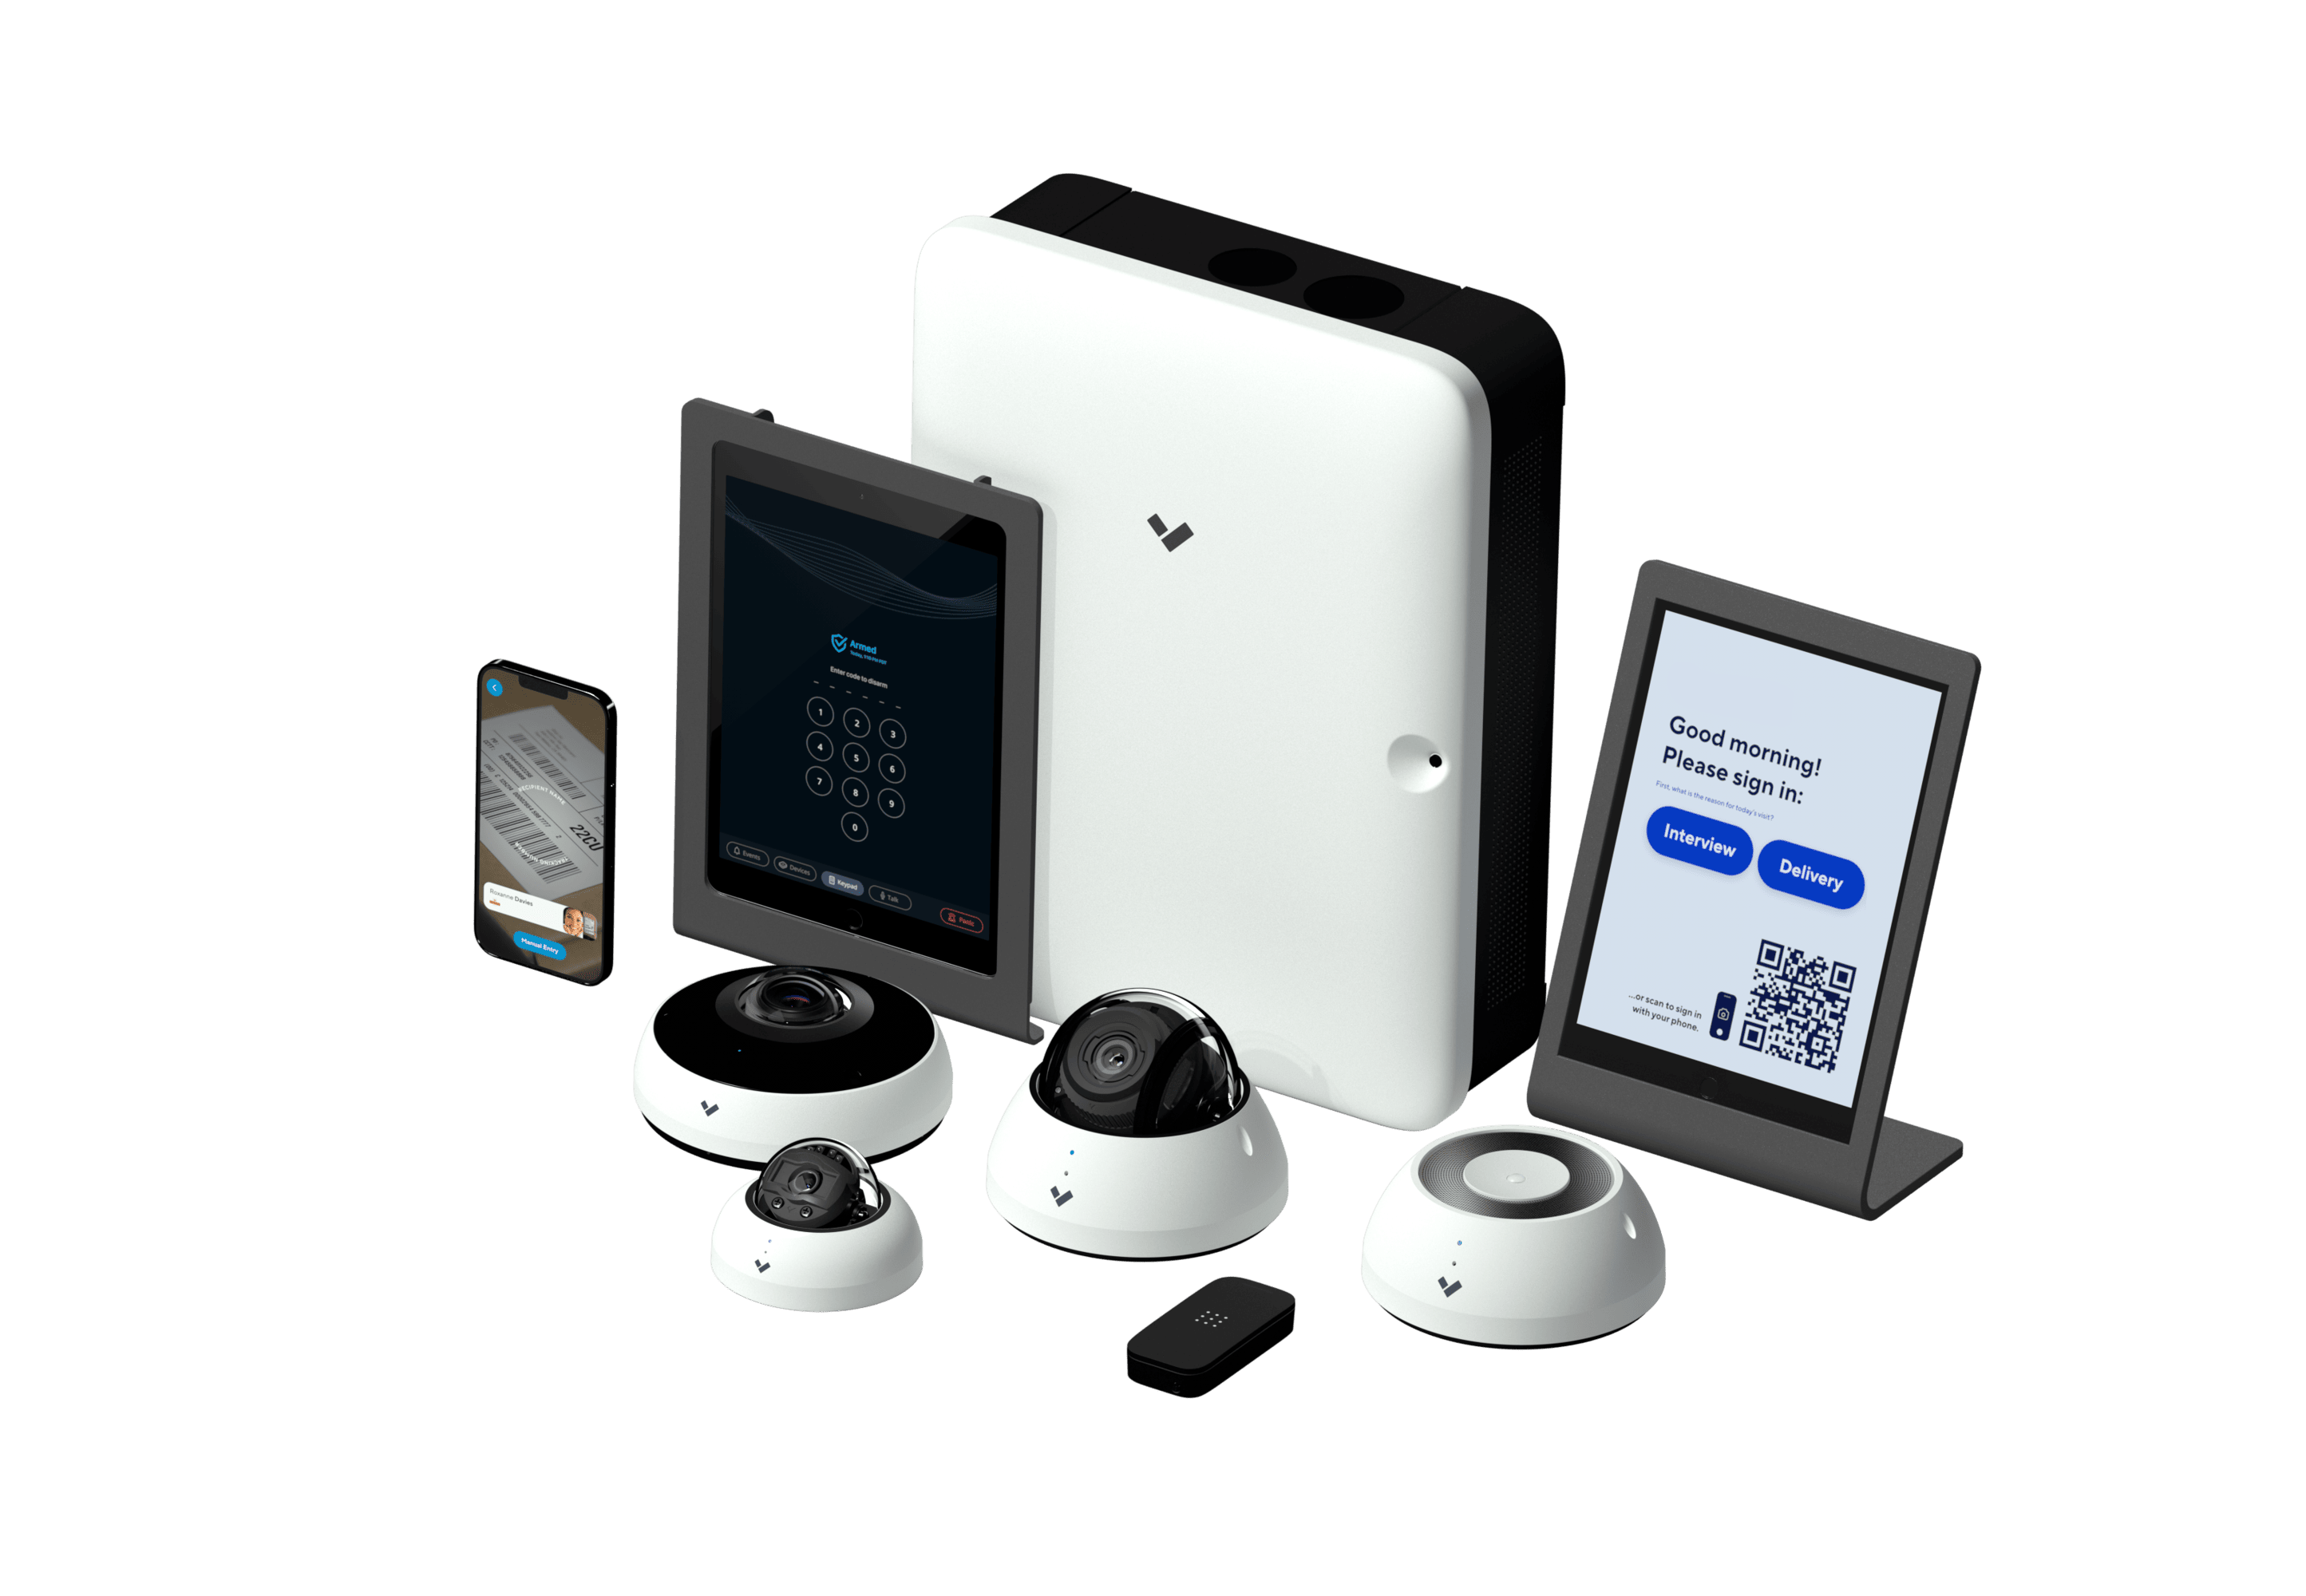 Verkada family of video recognition cameras